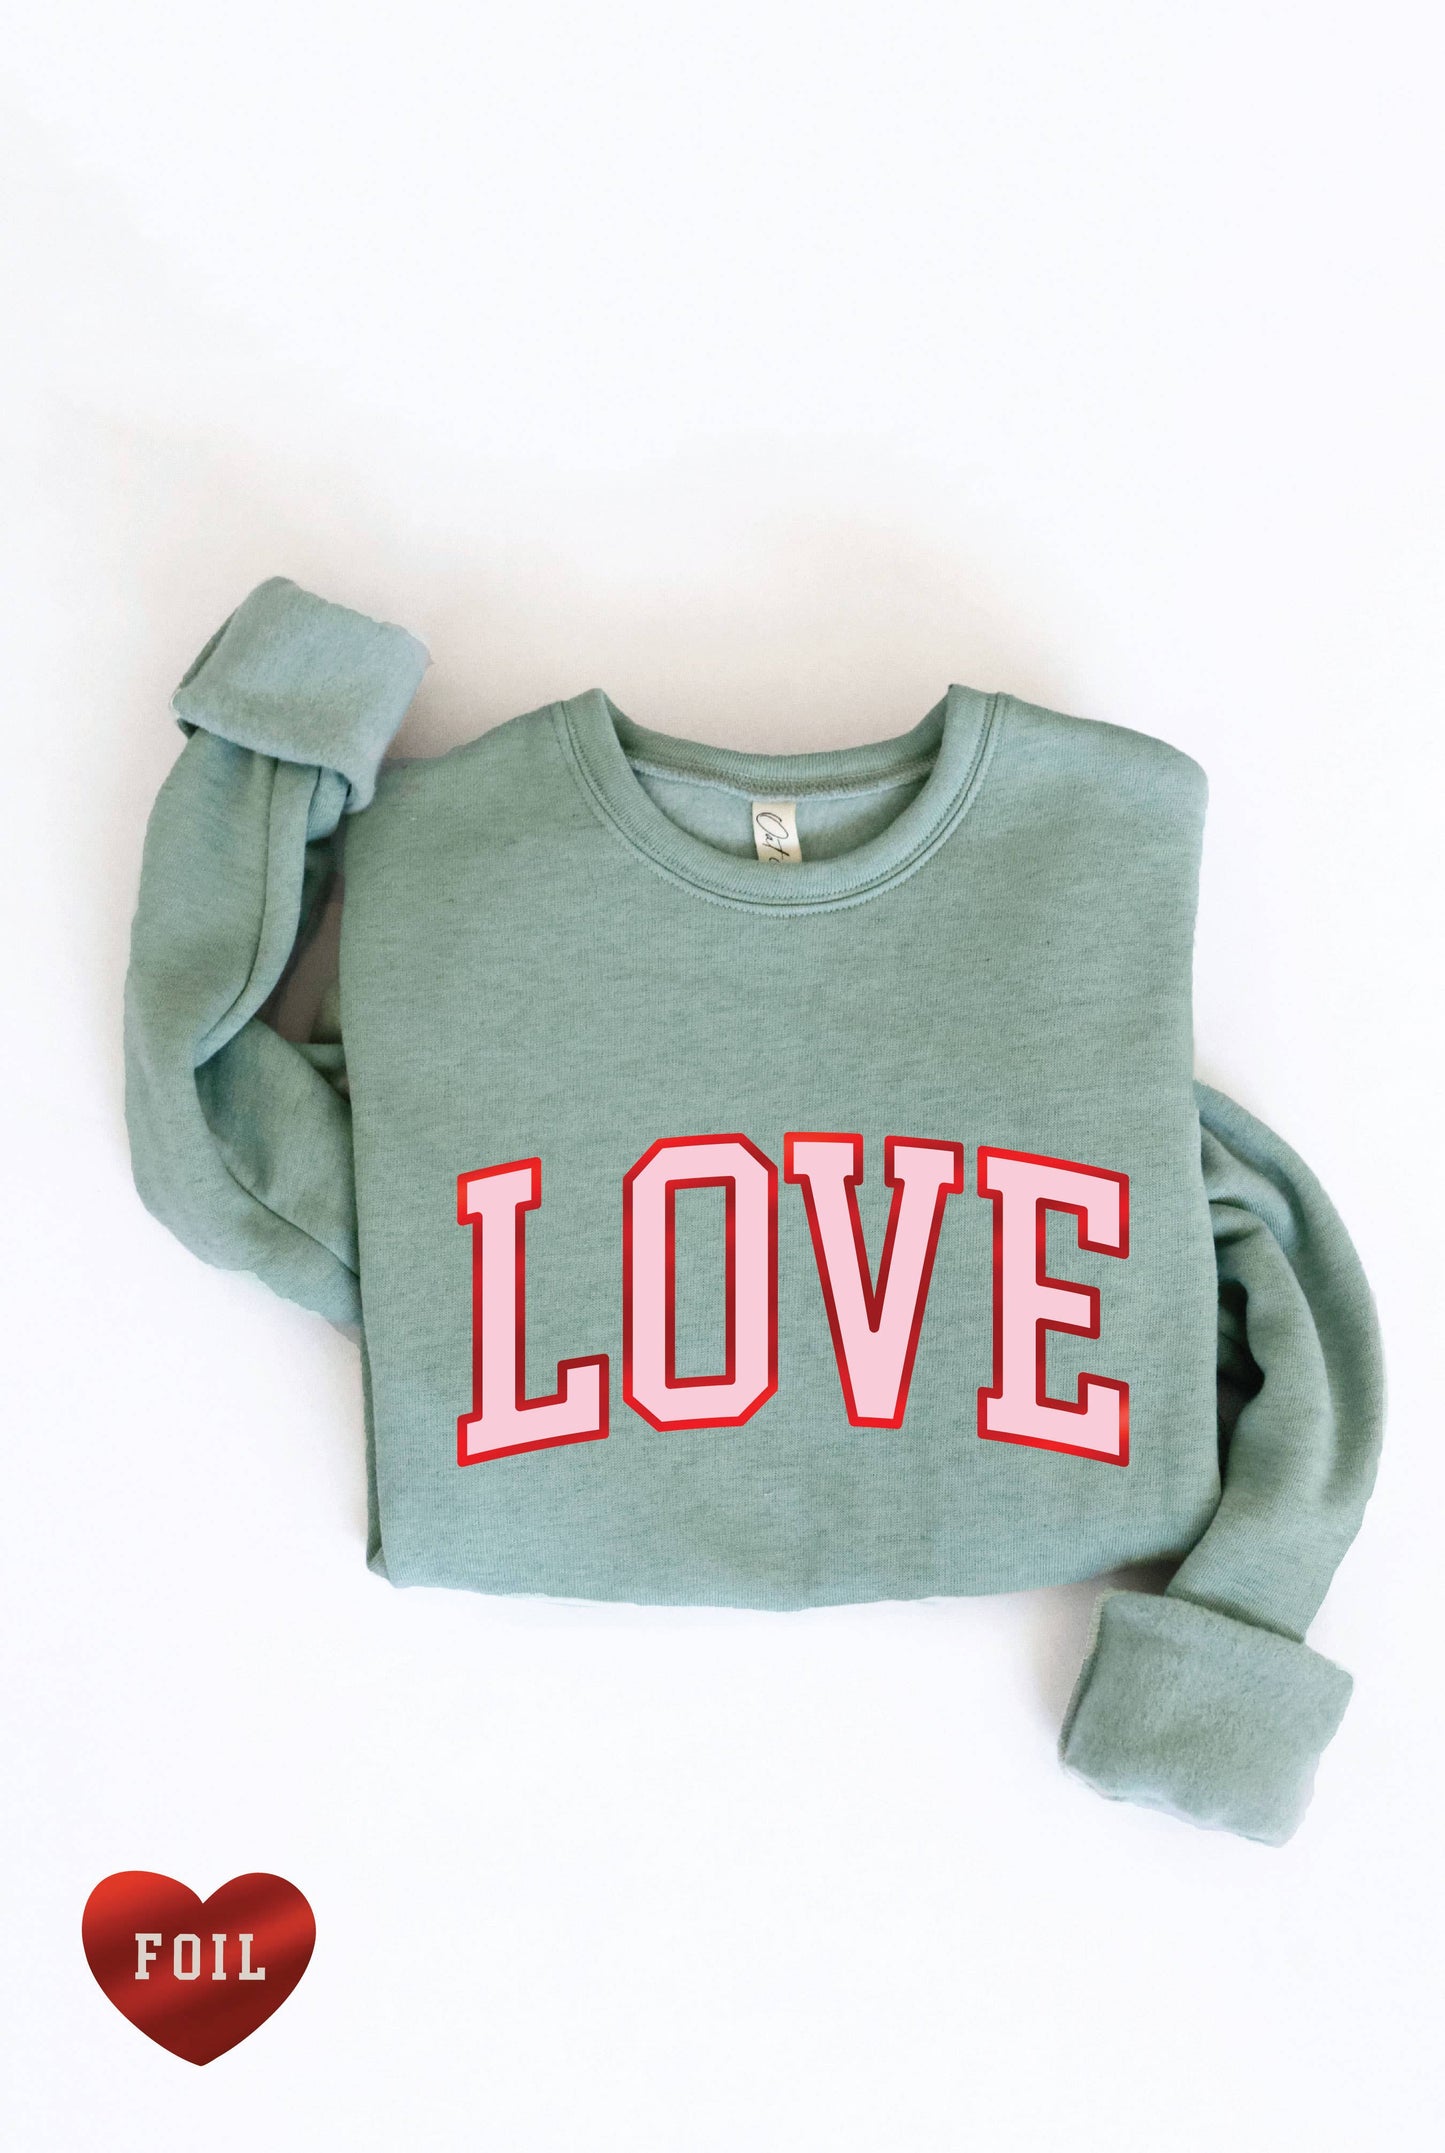 LOVE FOIL Graphic Sweatshirt: S / ROSE